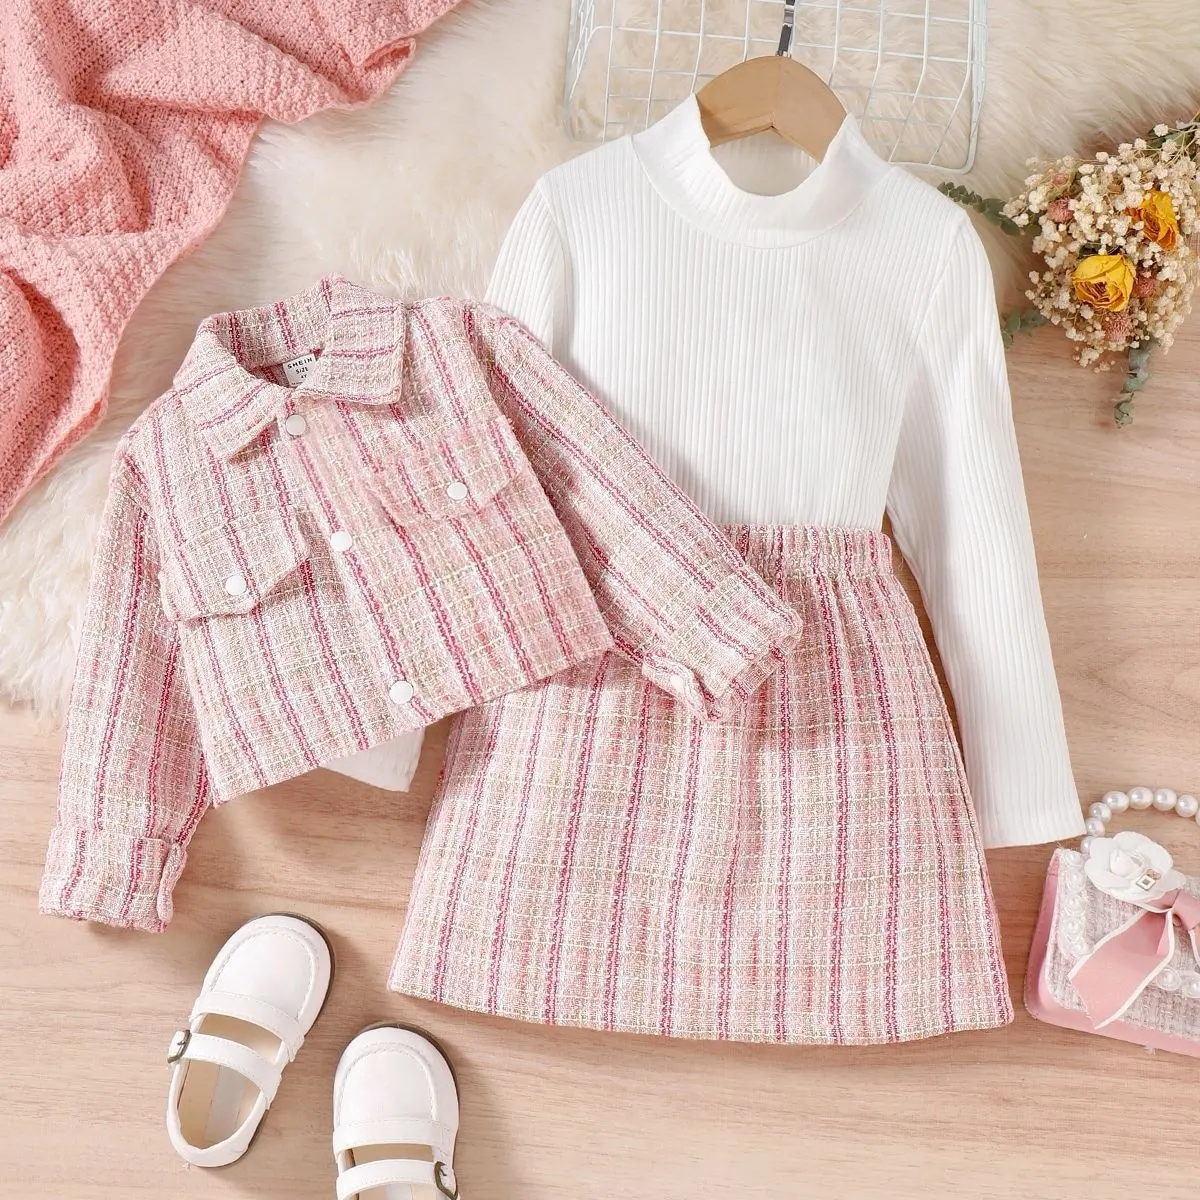 2022 Autumn Winter Boutique Kids Clothing Long Sleeve Turtleneck Sweater Plaid Button Coat A Line Skirt 3Pcs Girls Clothes